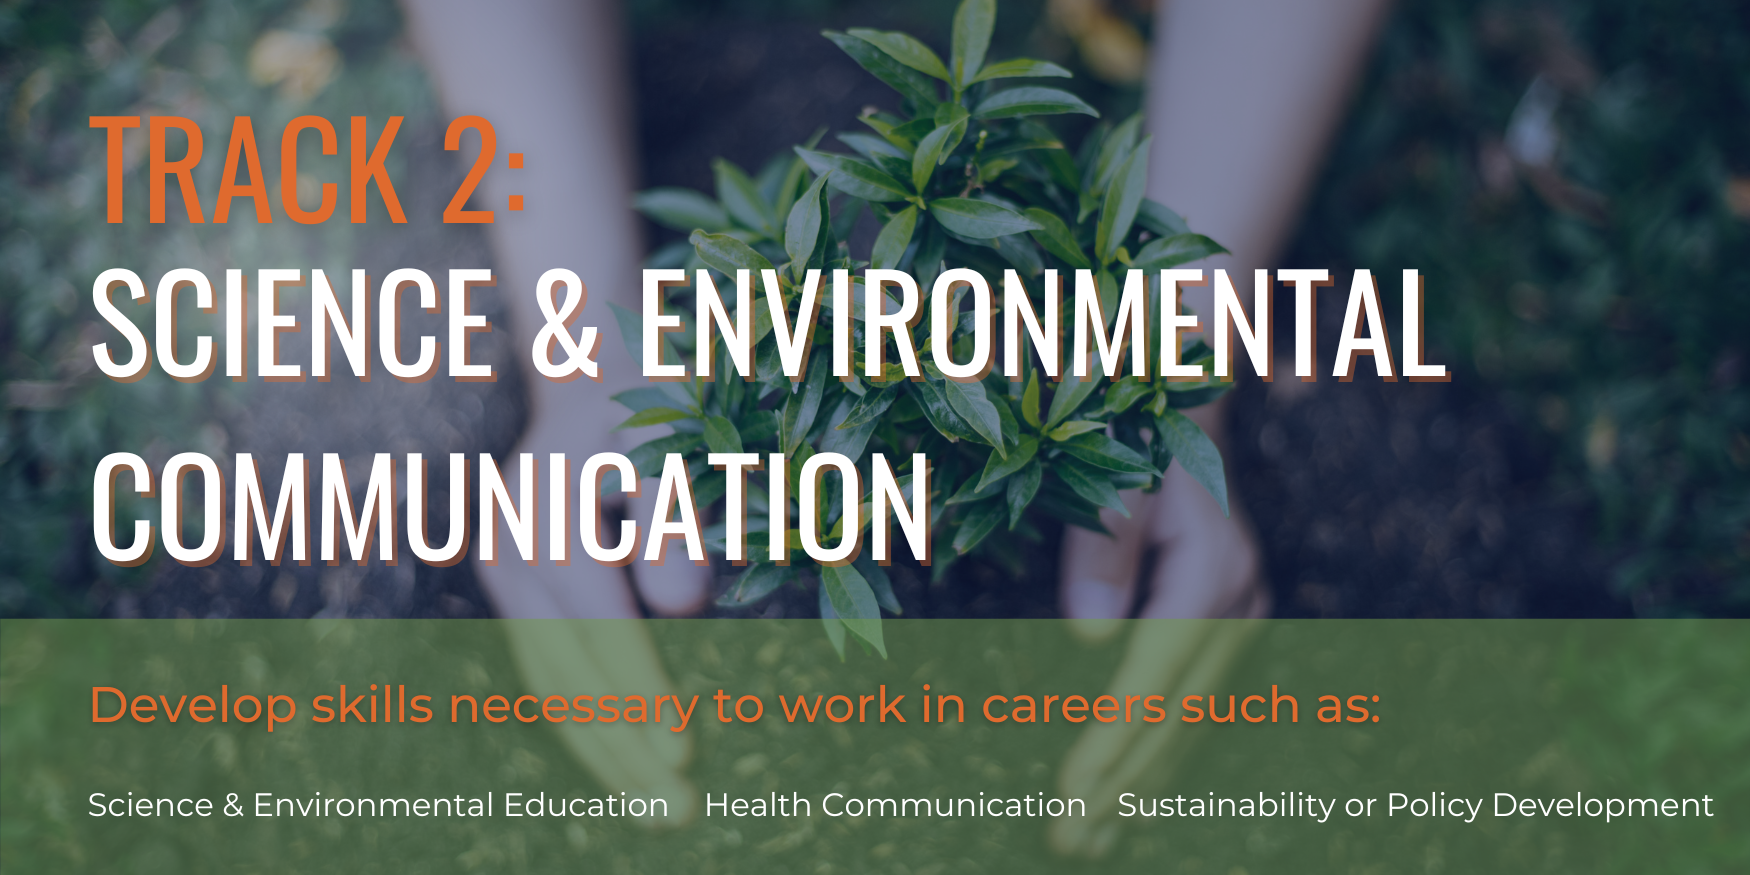 Track 2: Science & Environmental Communication